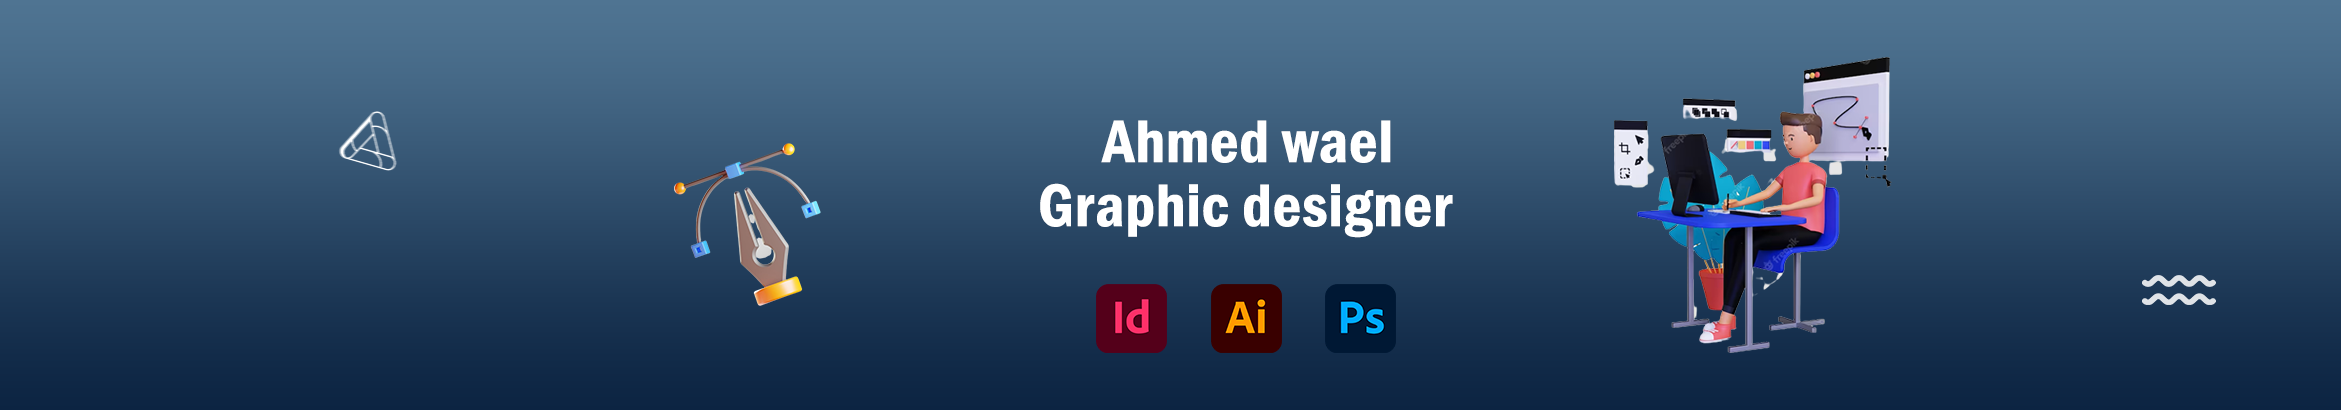 Ahmed wael's profile banner